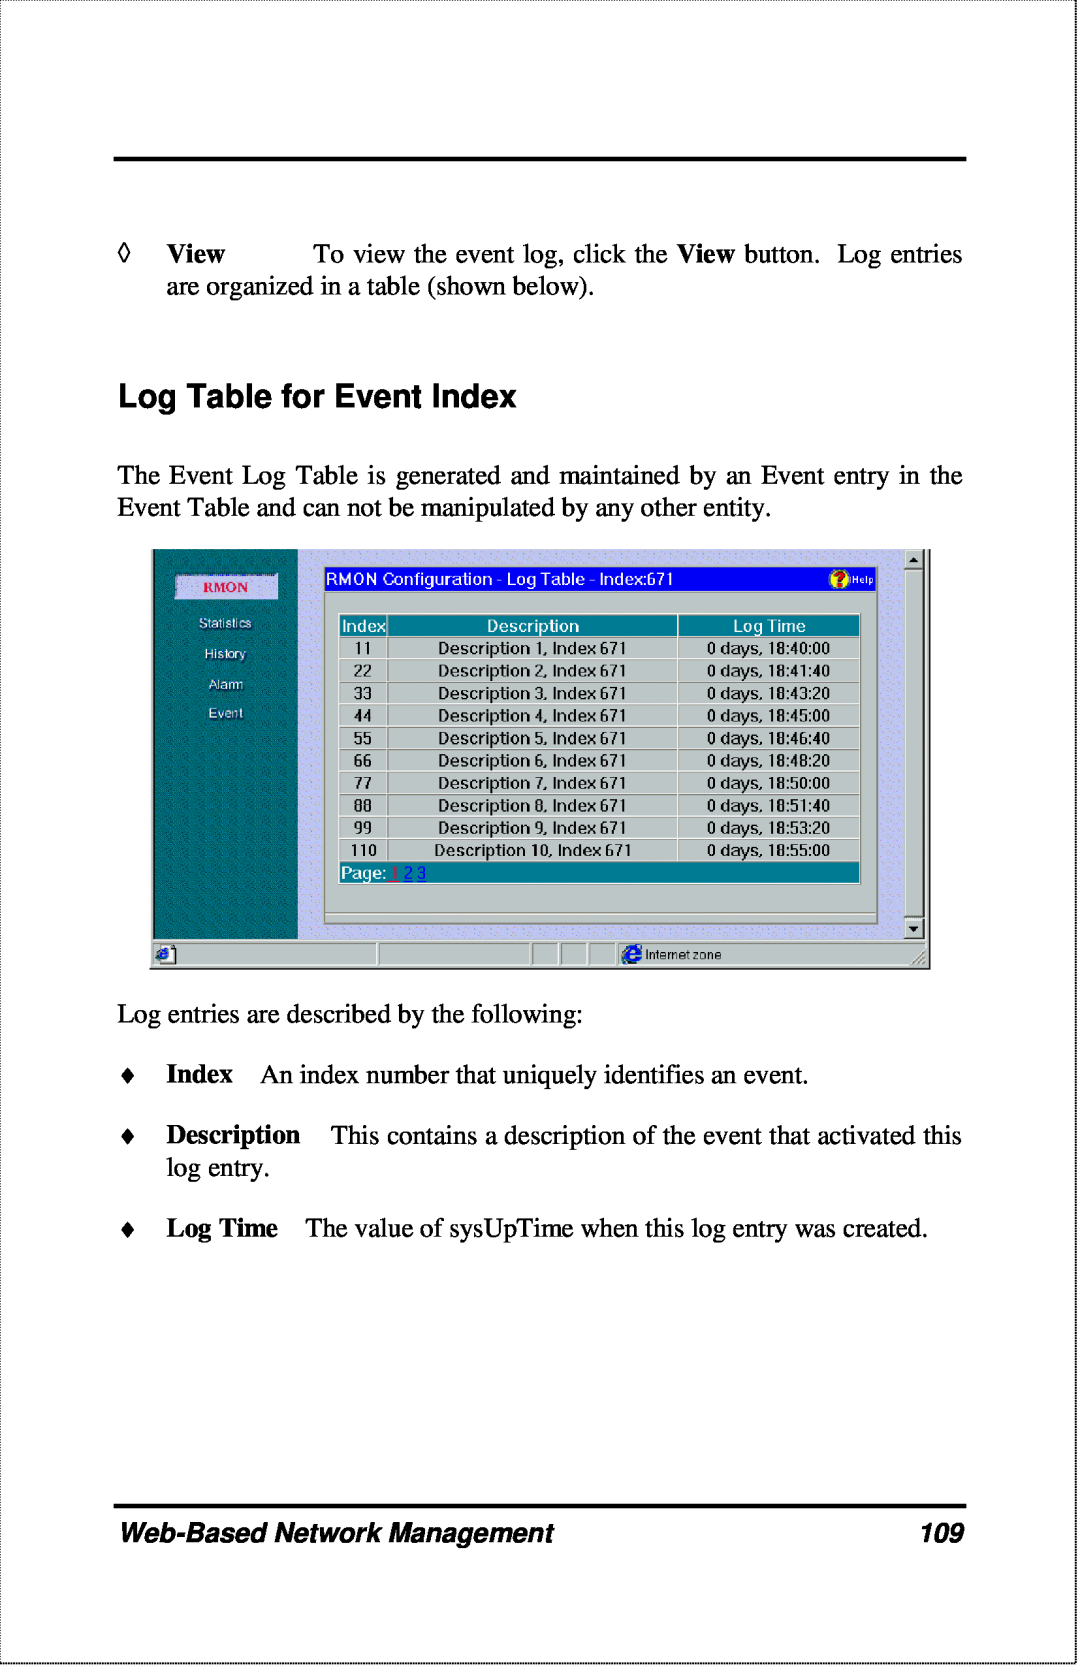 D-Link DFE-2600 manual Log Table for Event Index, Web-Based Network Management 